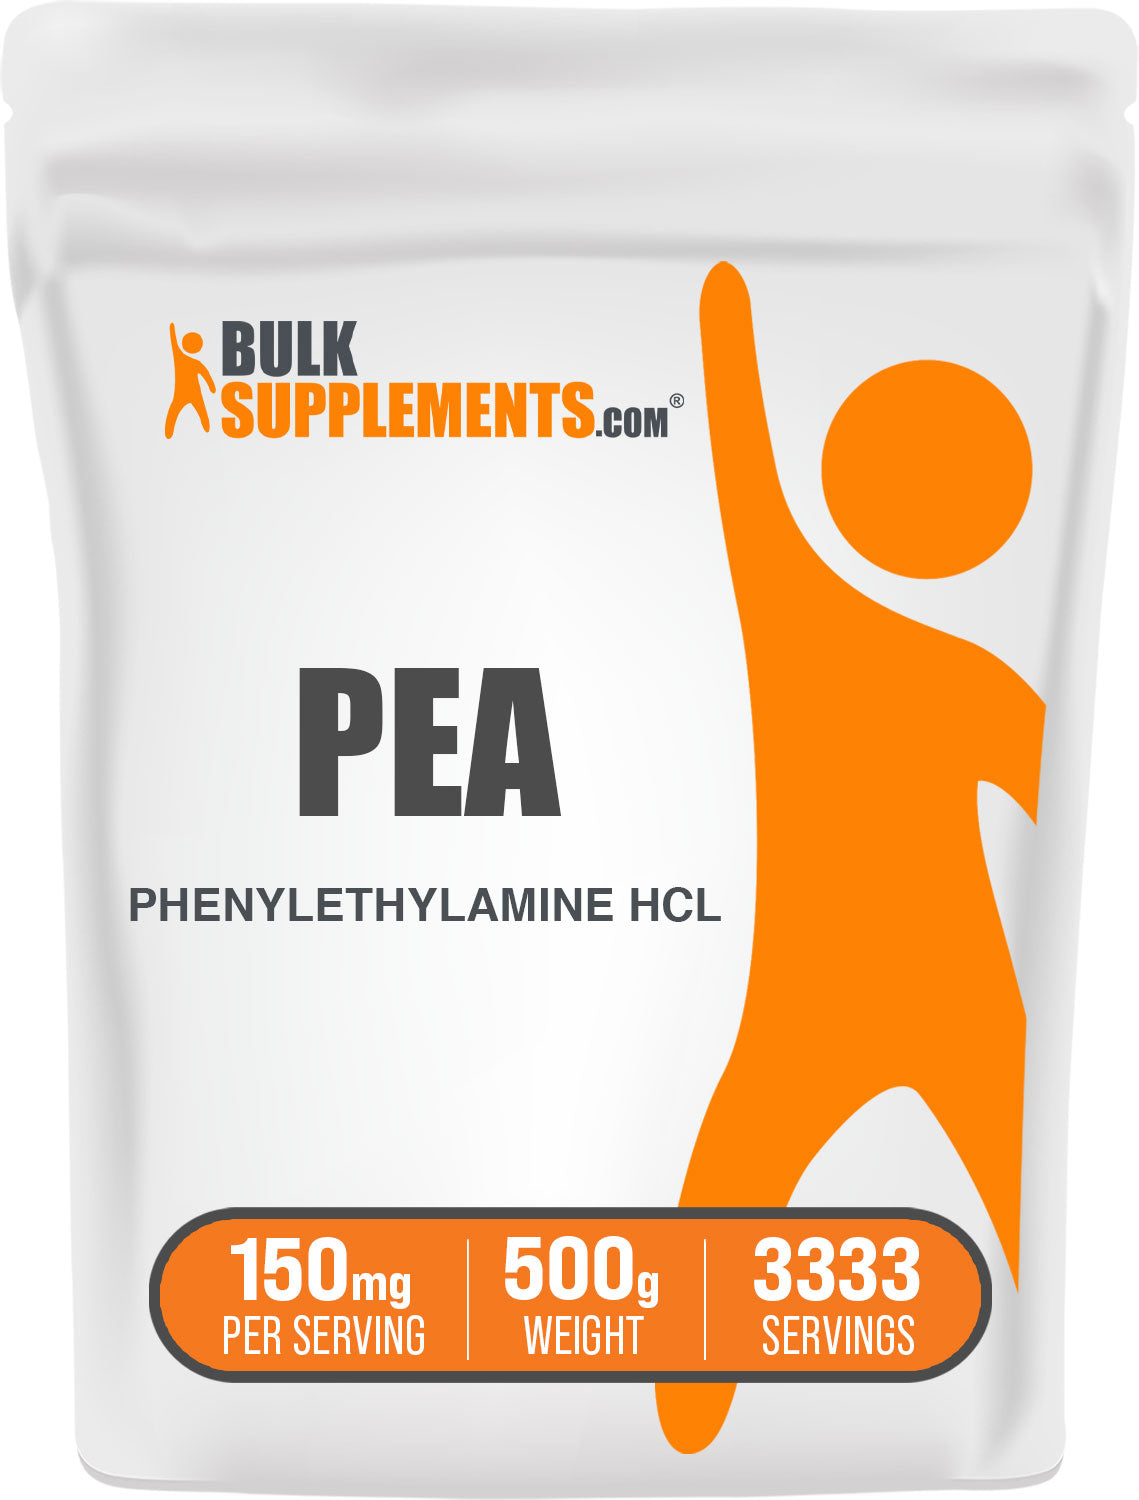 BulkSupplements.com Phenylethylamine HCl (PEA) 500g Bag